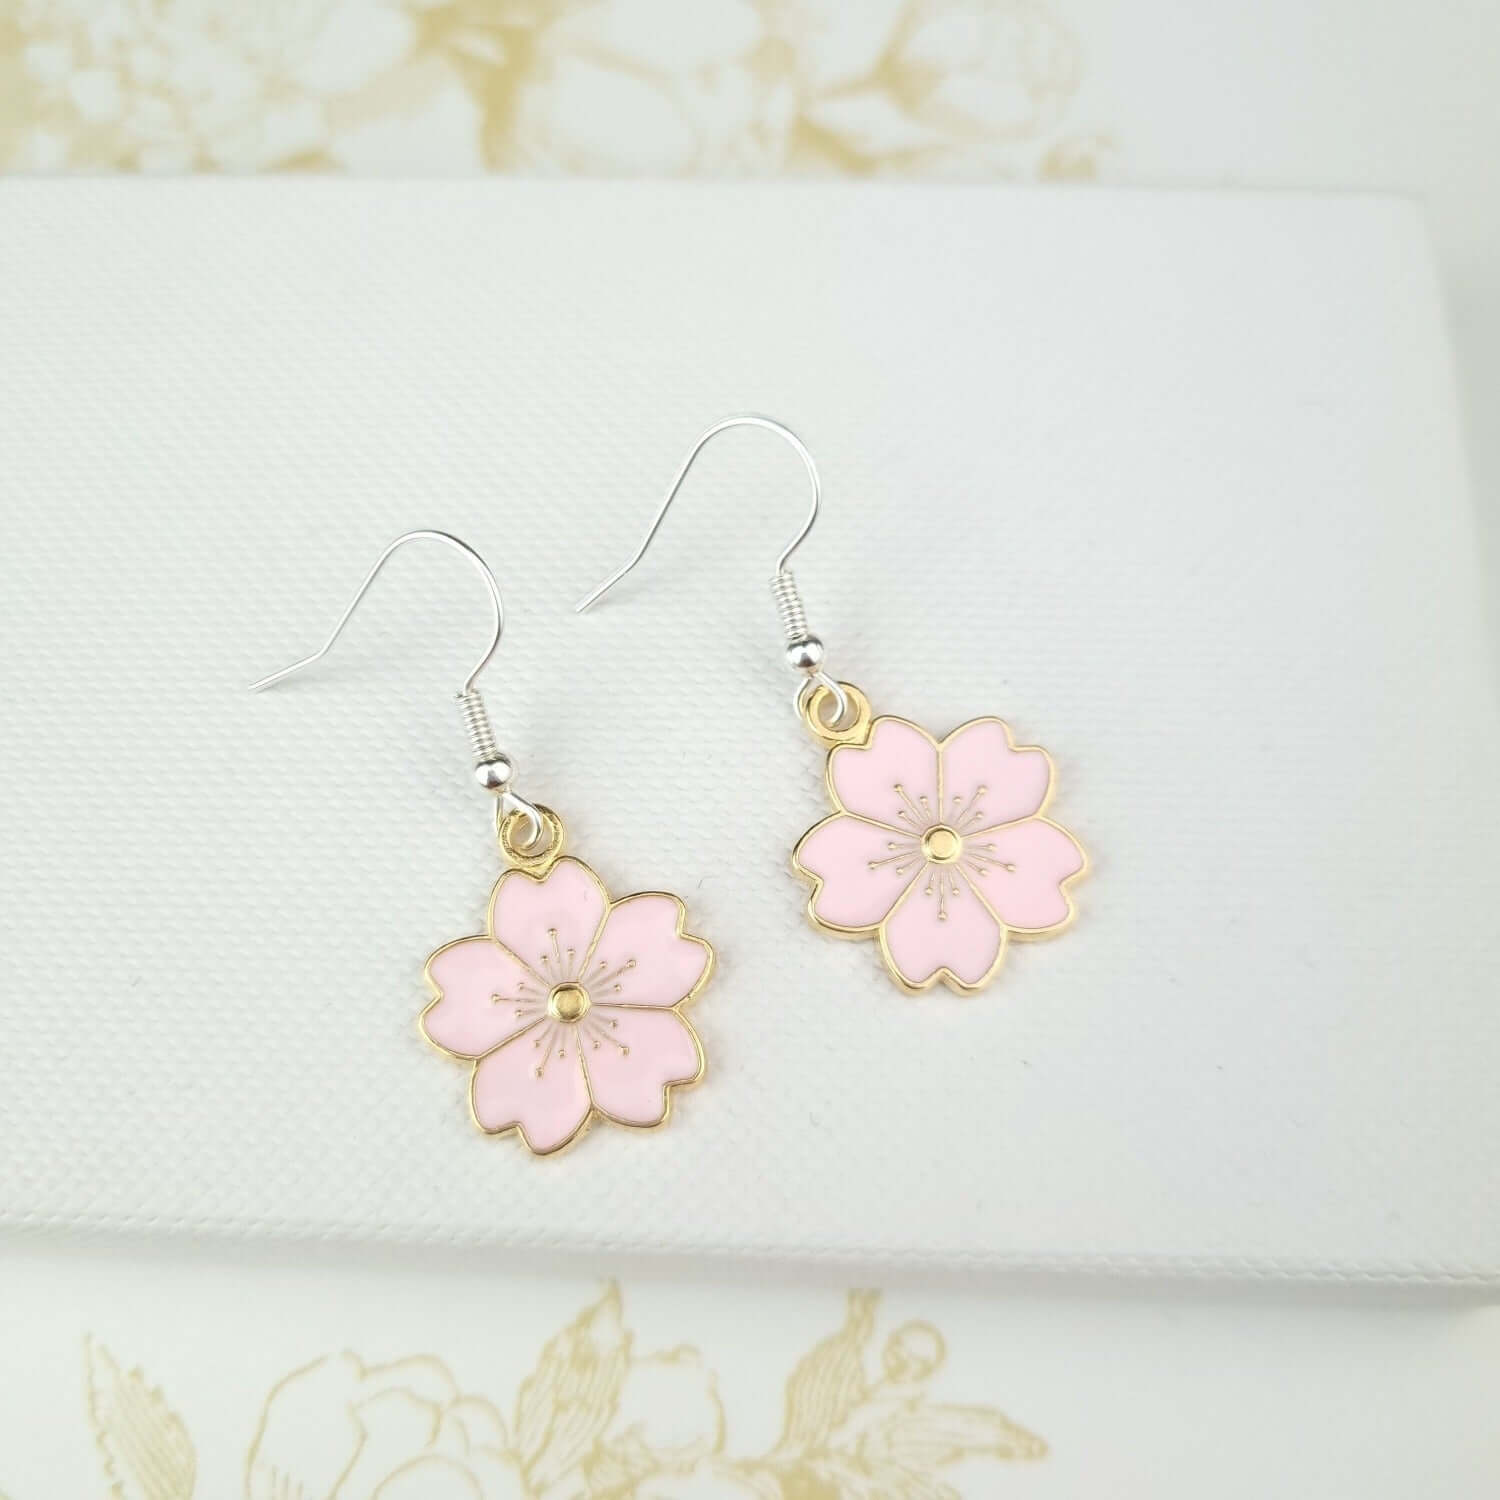 Cherry blossom dangle drop earrings